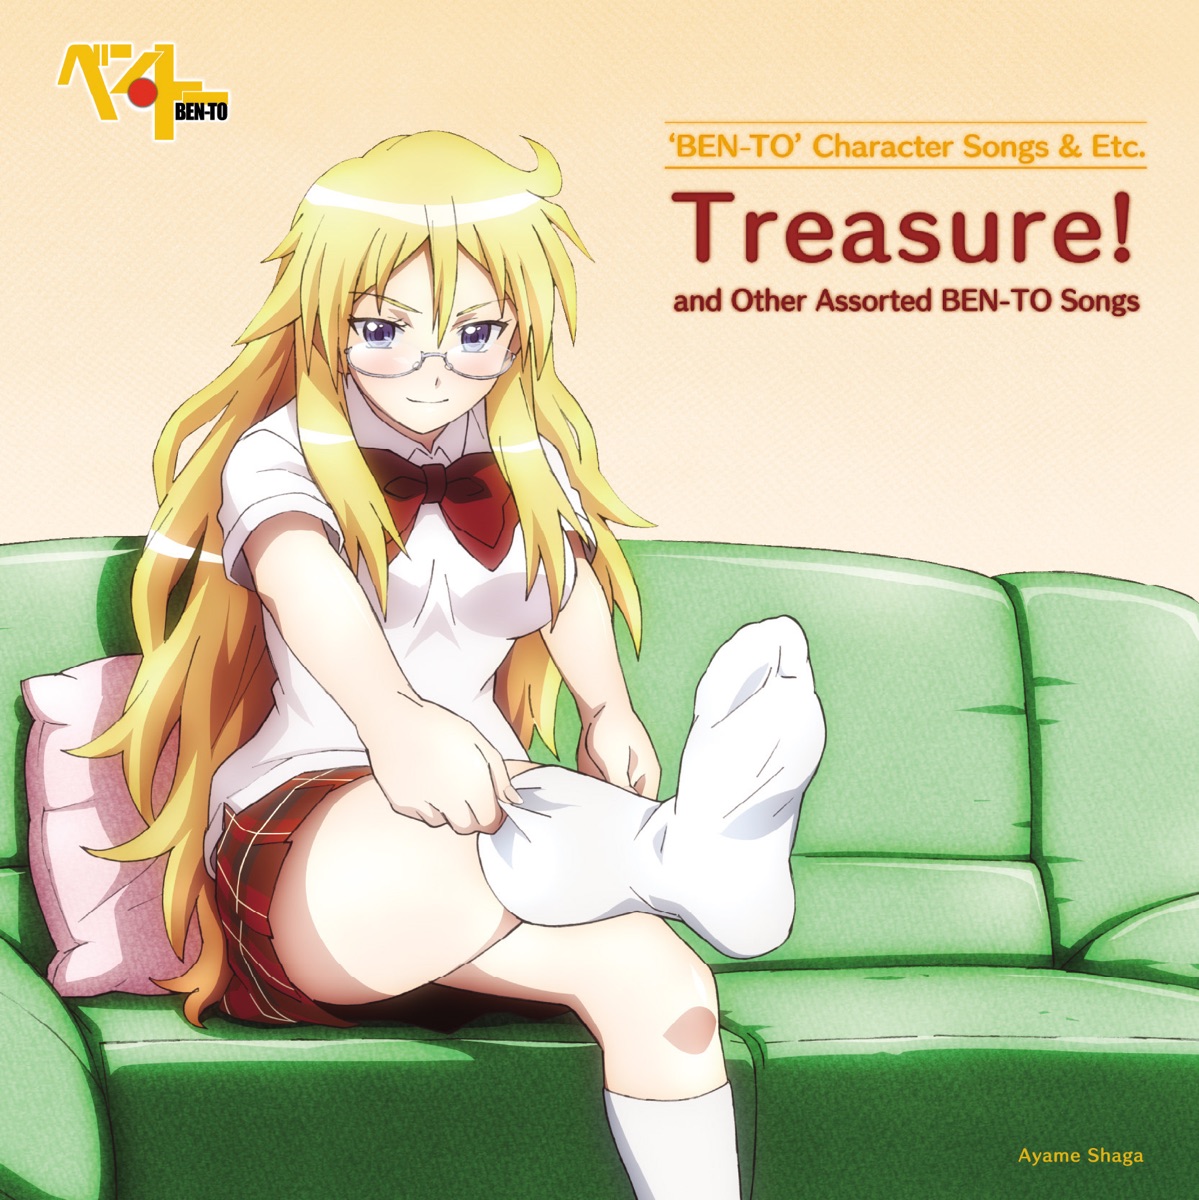 Smoker One Piece Anime Manga, Treasure cruise, manga, fictional Character  png | PNGEgg